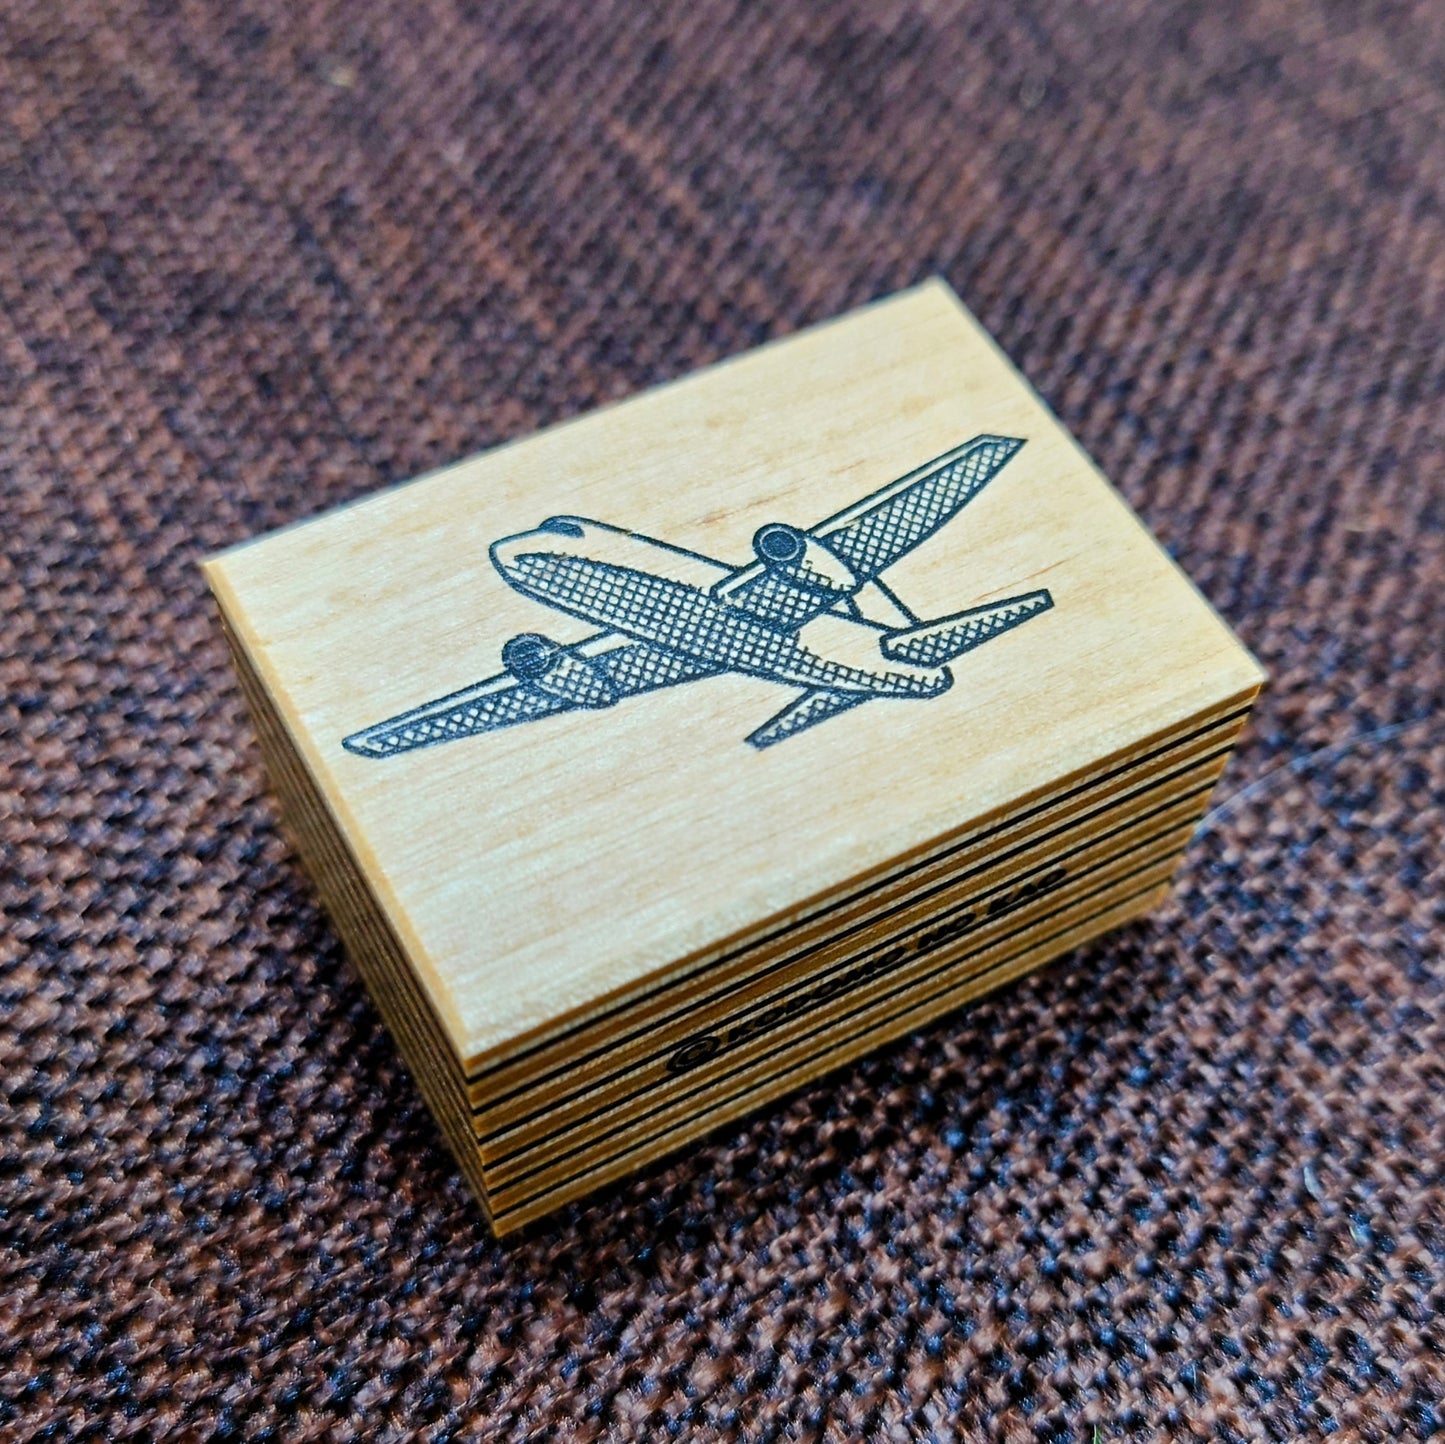 The Stamp series 飛機